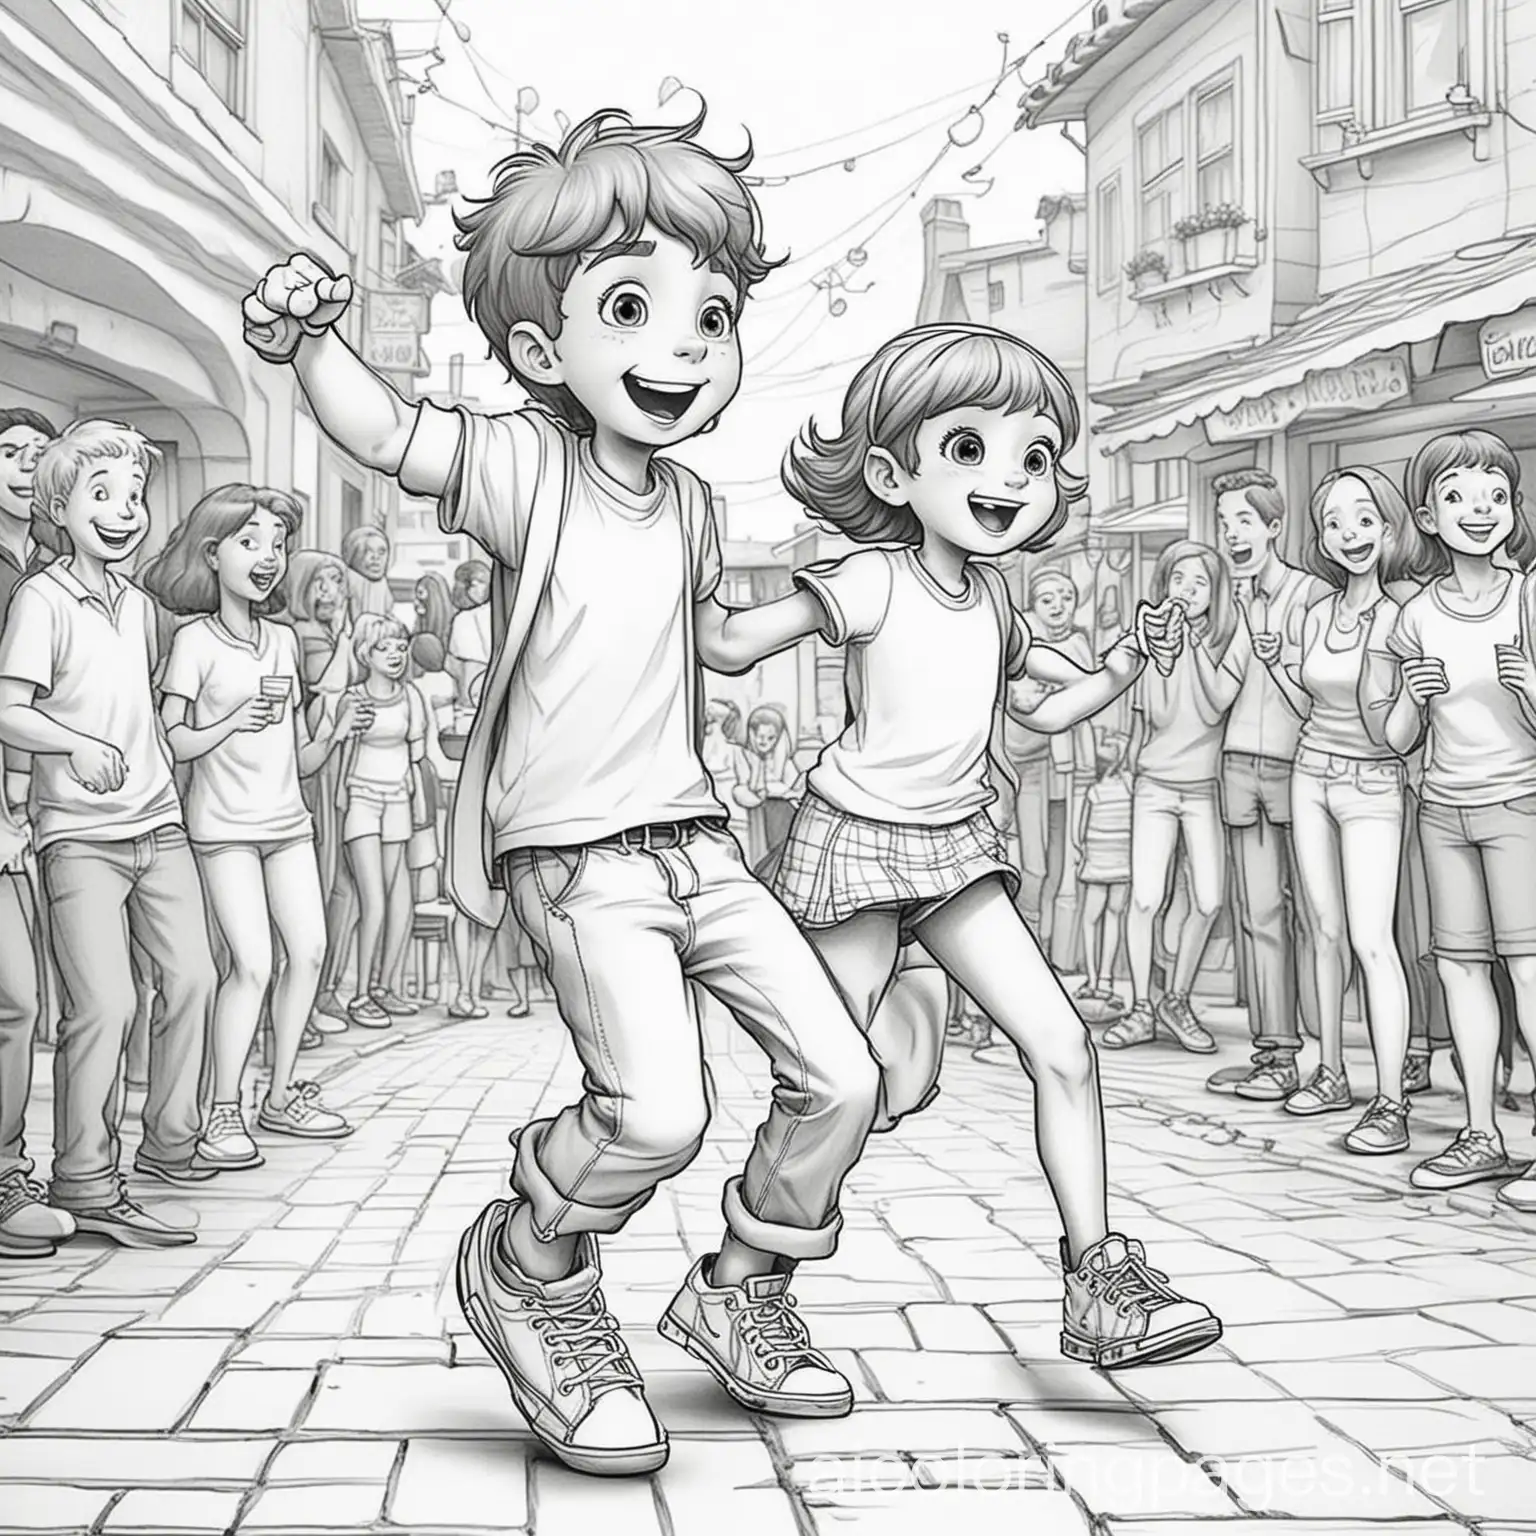 Joyful-Cartoon-Boy-and-Girl-Dancing-at-a-Vibrant-Block-Party